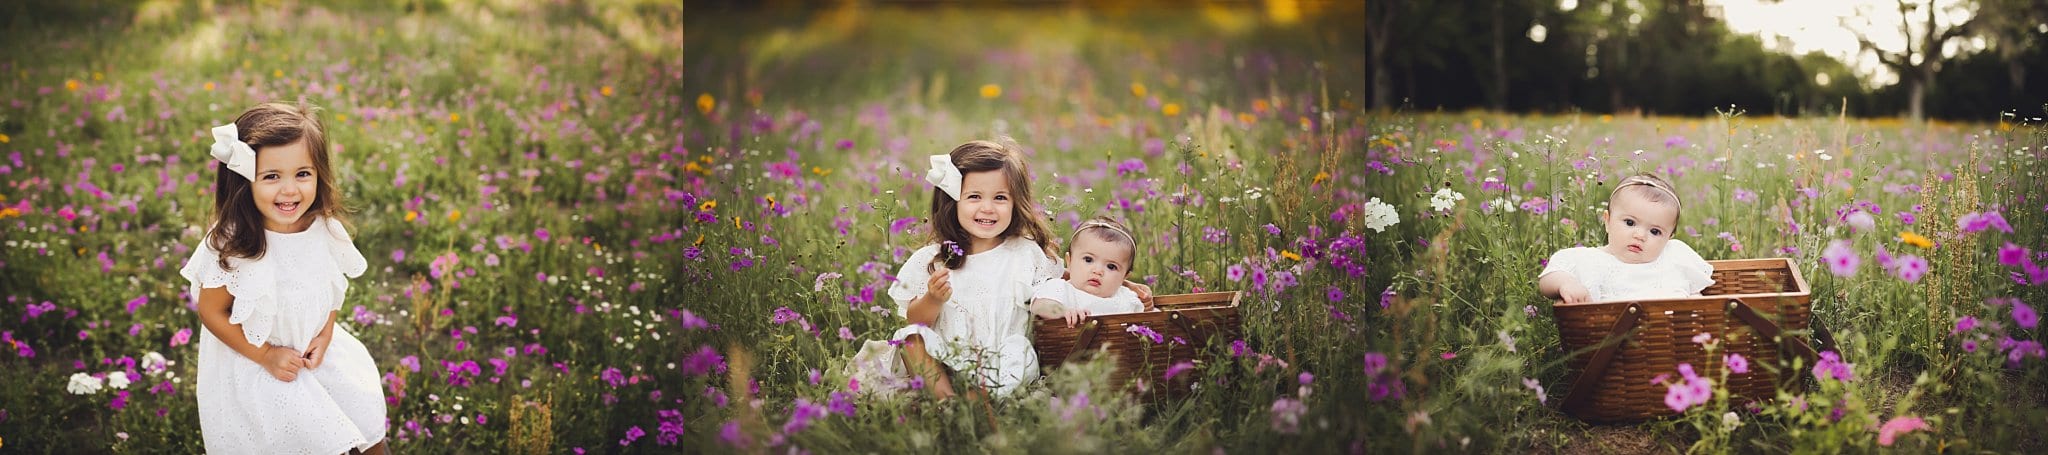 little girl and baby sister.Hampton Flower Field Jacksonville Fl beautiful field of purple and yellow flowers